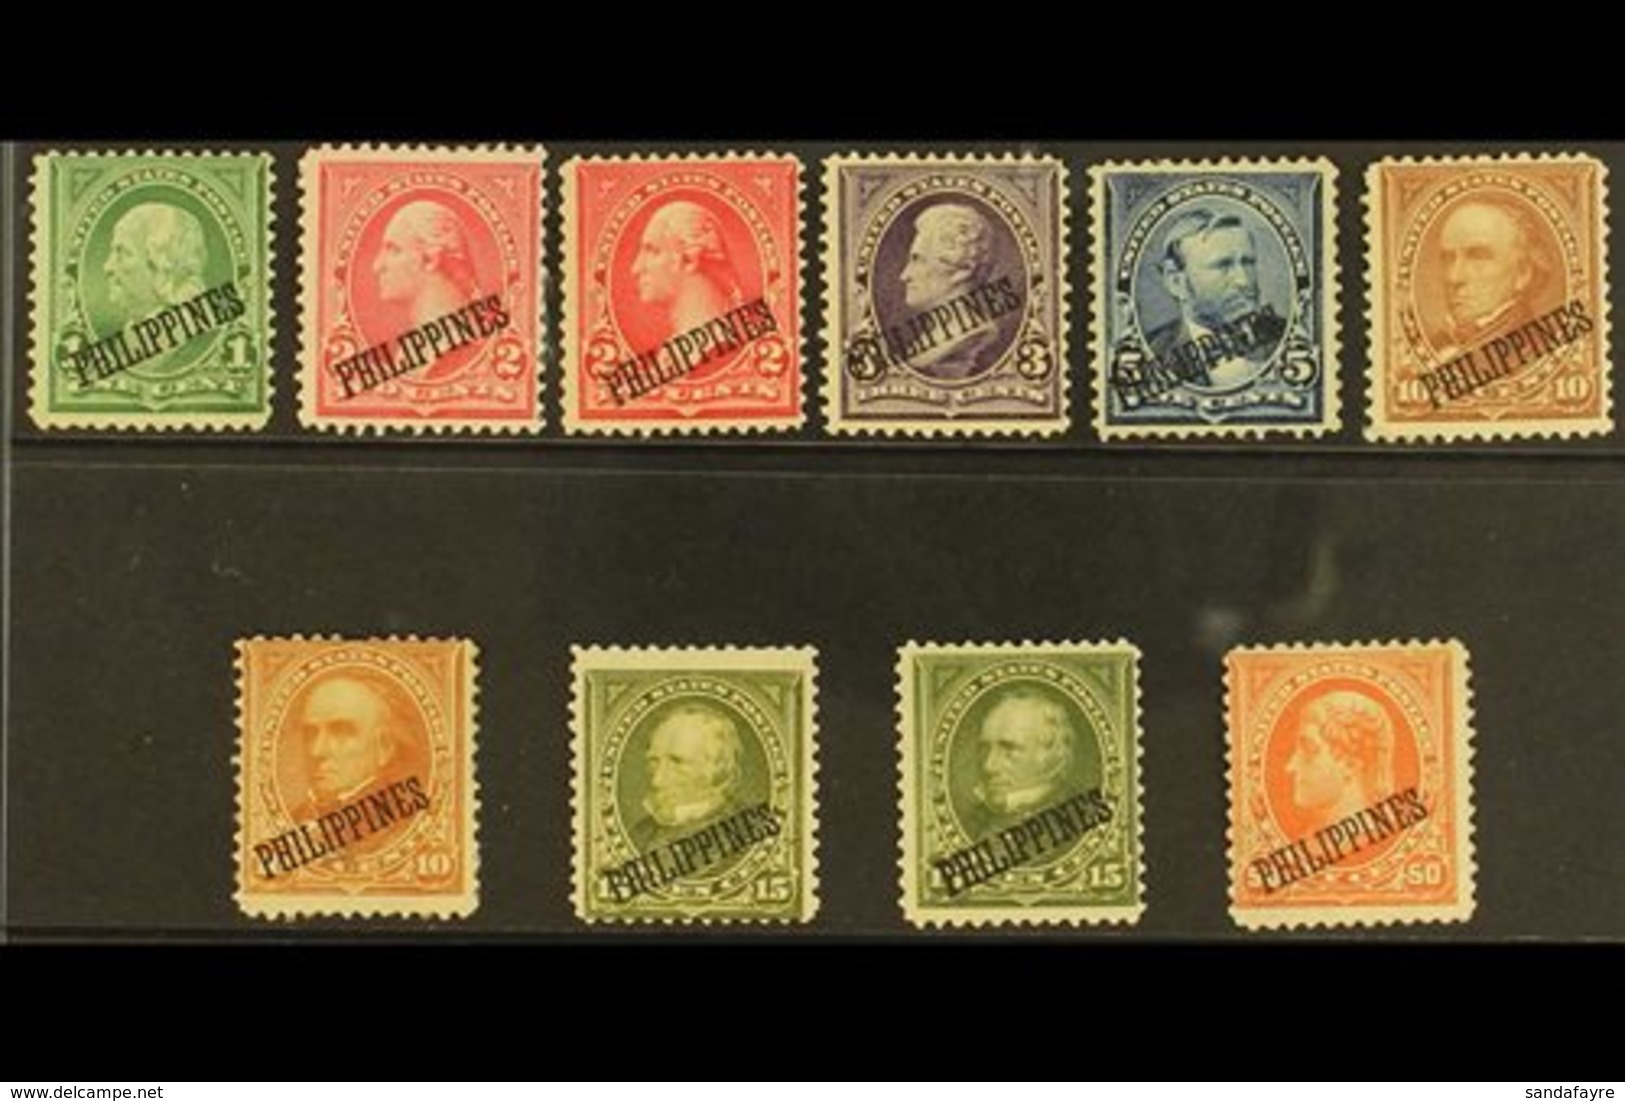 1899 Mint/unused Value To 50c Orange Ovptd Philippines Incl 2c Shades, 10c Both Types, 15c Both Shades, Between Sc 213/2 - Filipinas